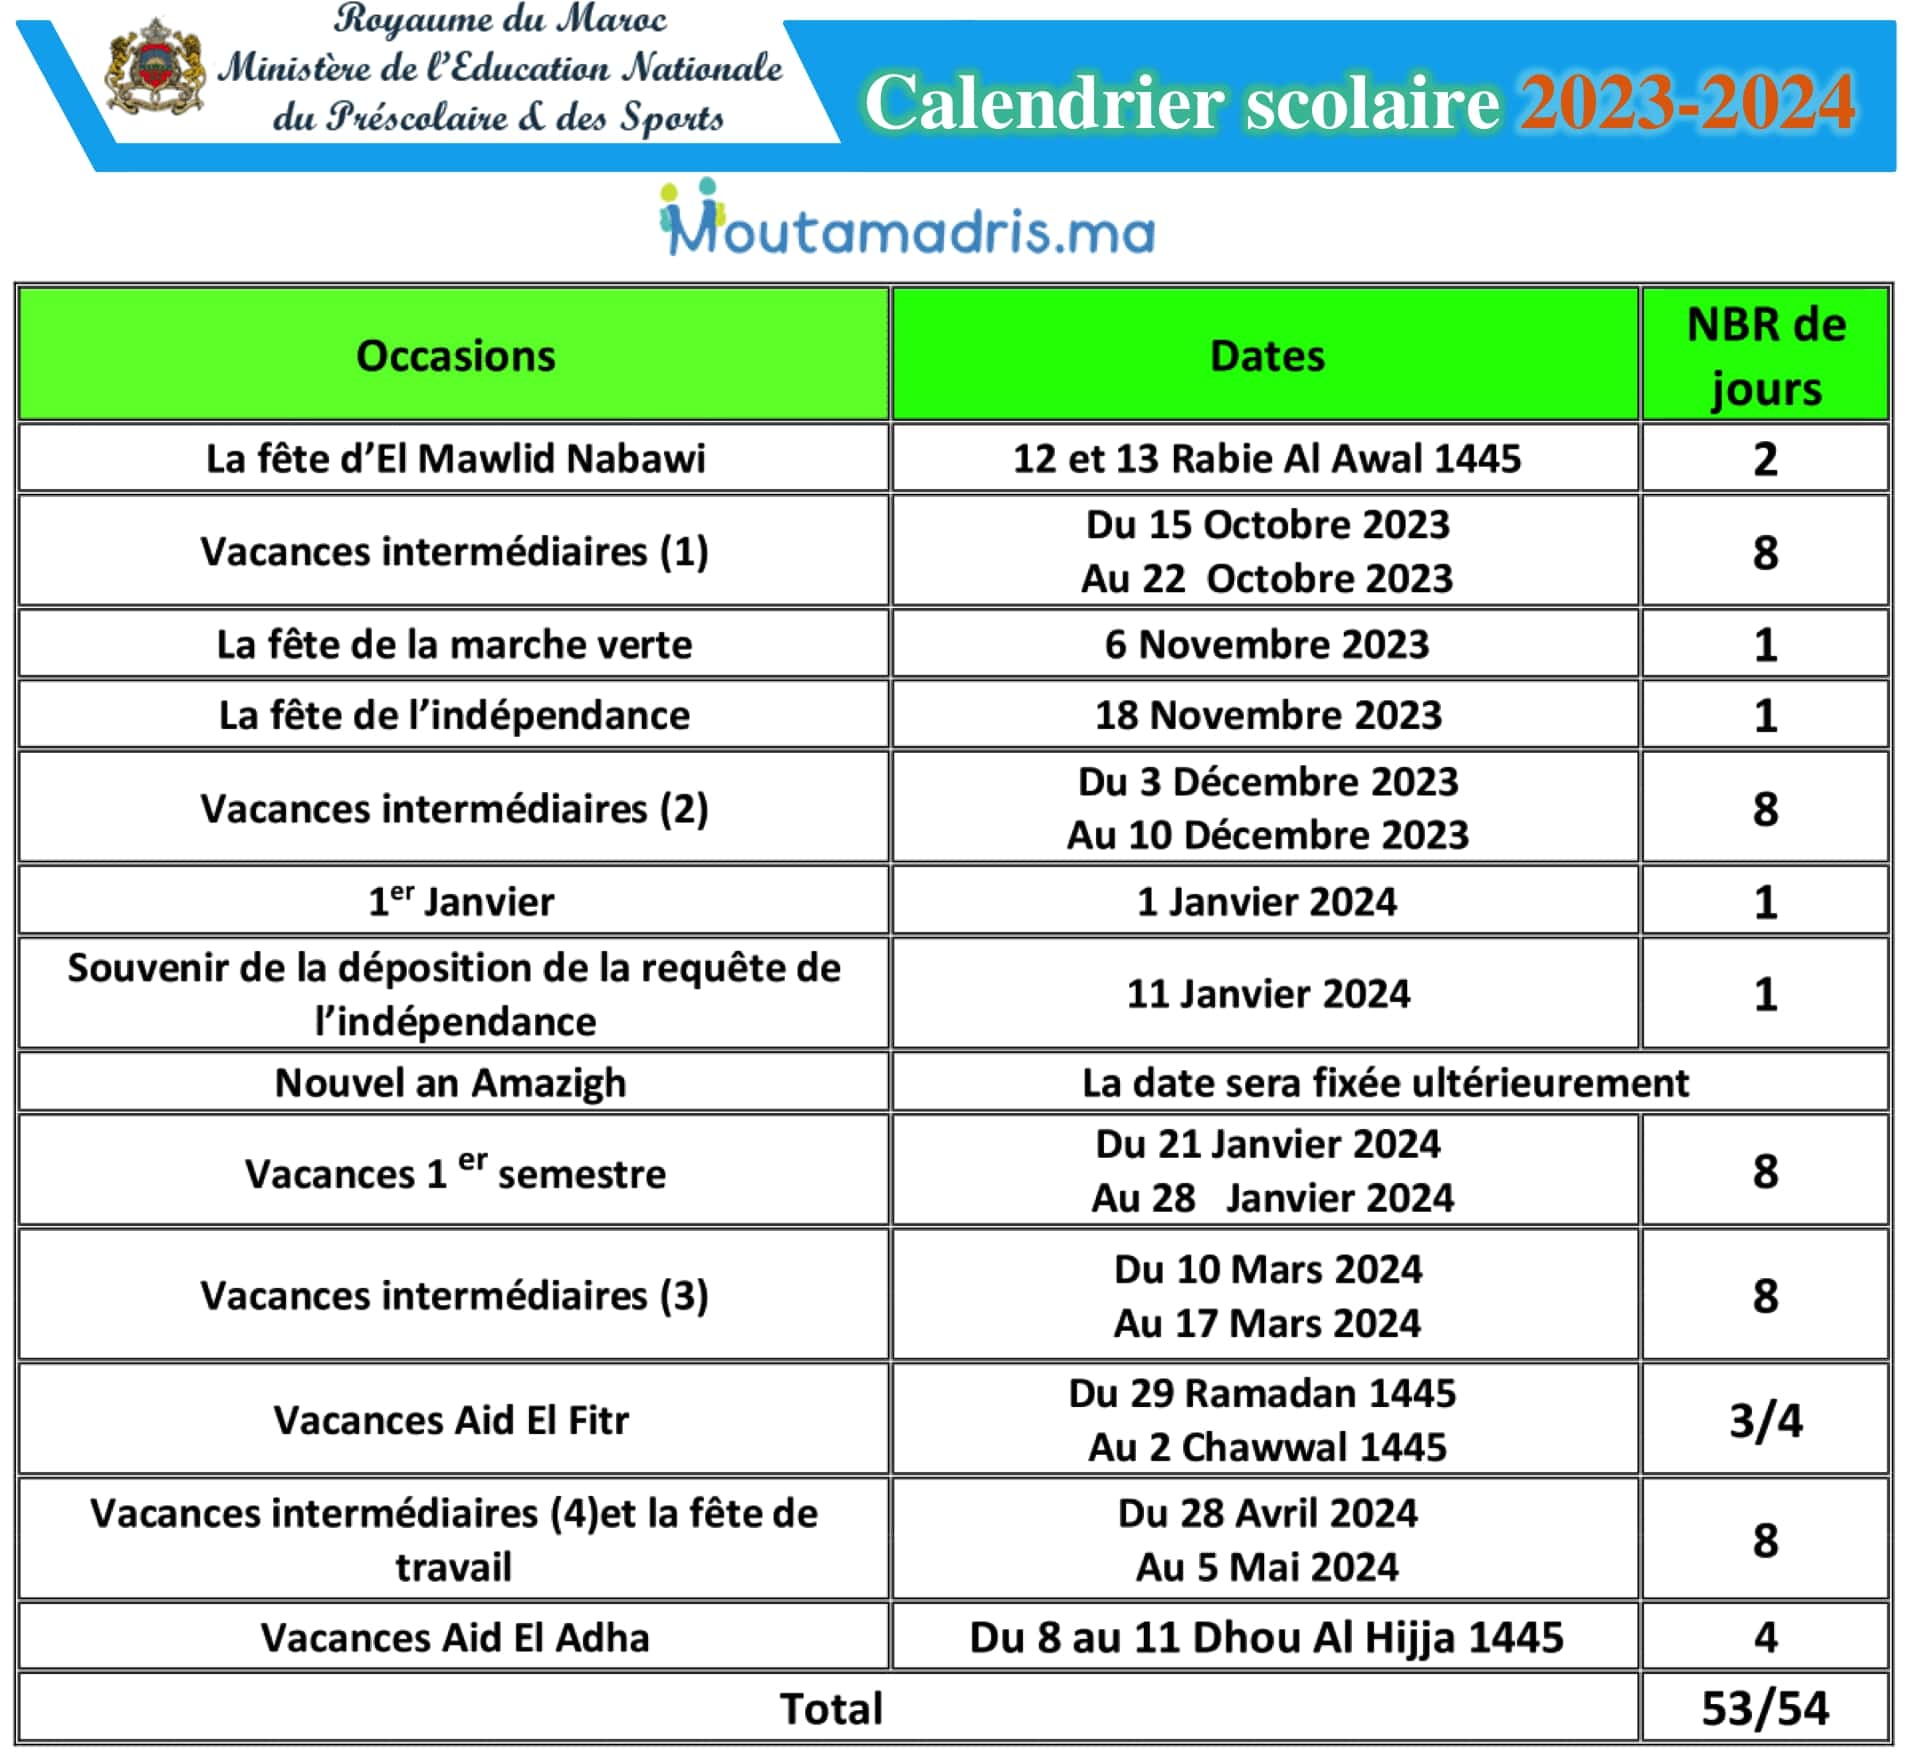 calendrier vacances scolaires 2023-2024 maroc